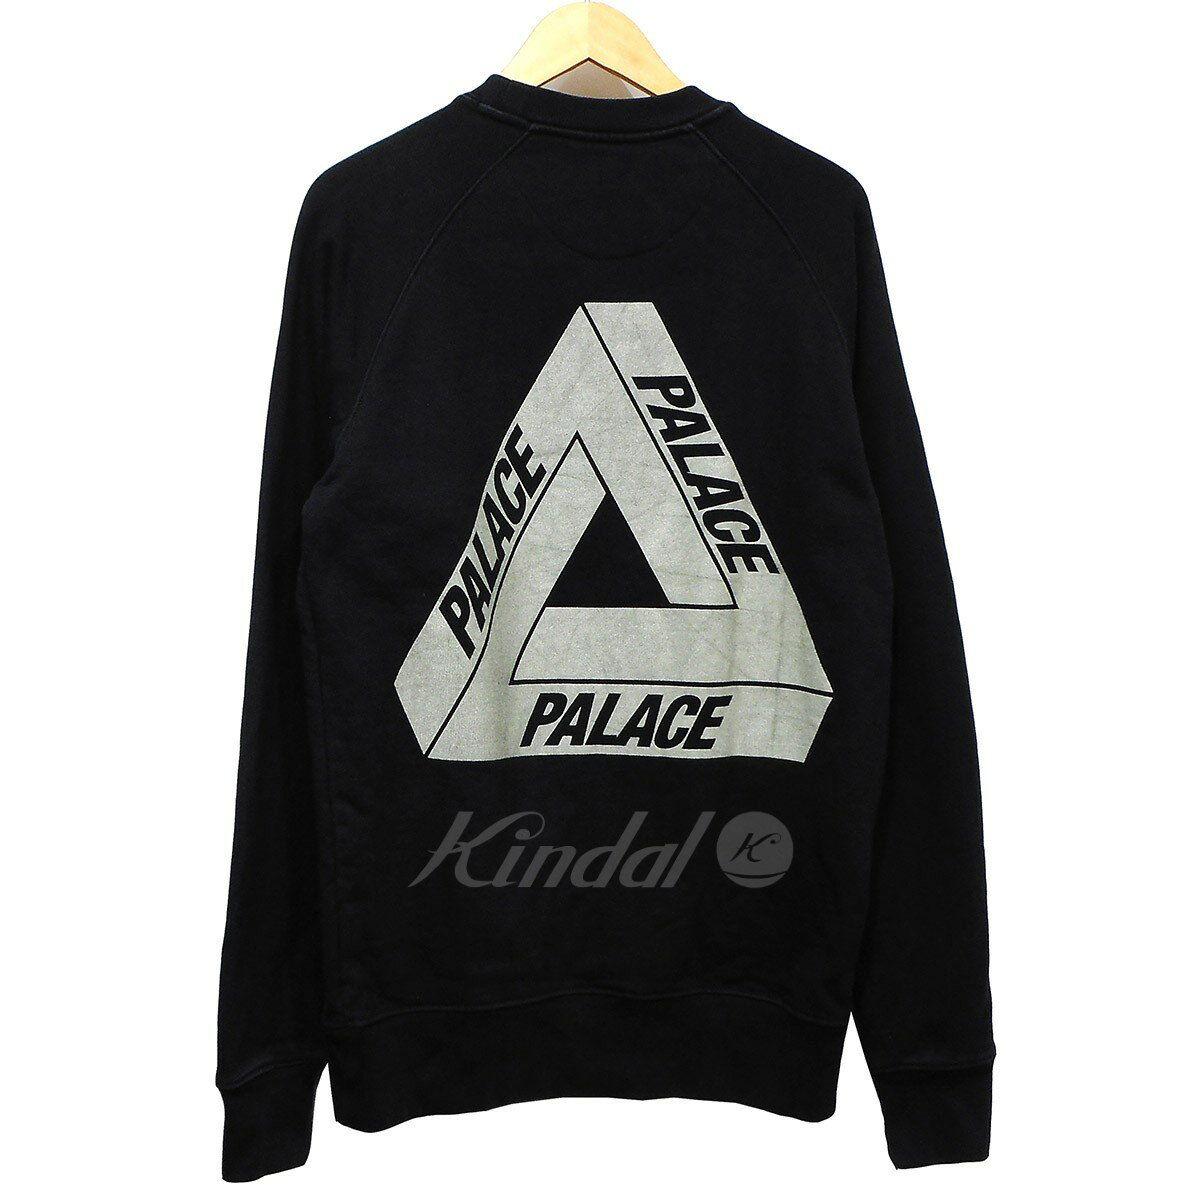 Palace Triangle Logo - kindal: PALACE 3M CREWNECK triangle logo crew neck sweat shirt ...